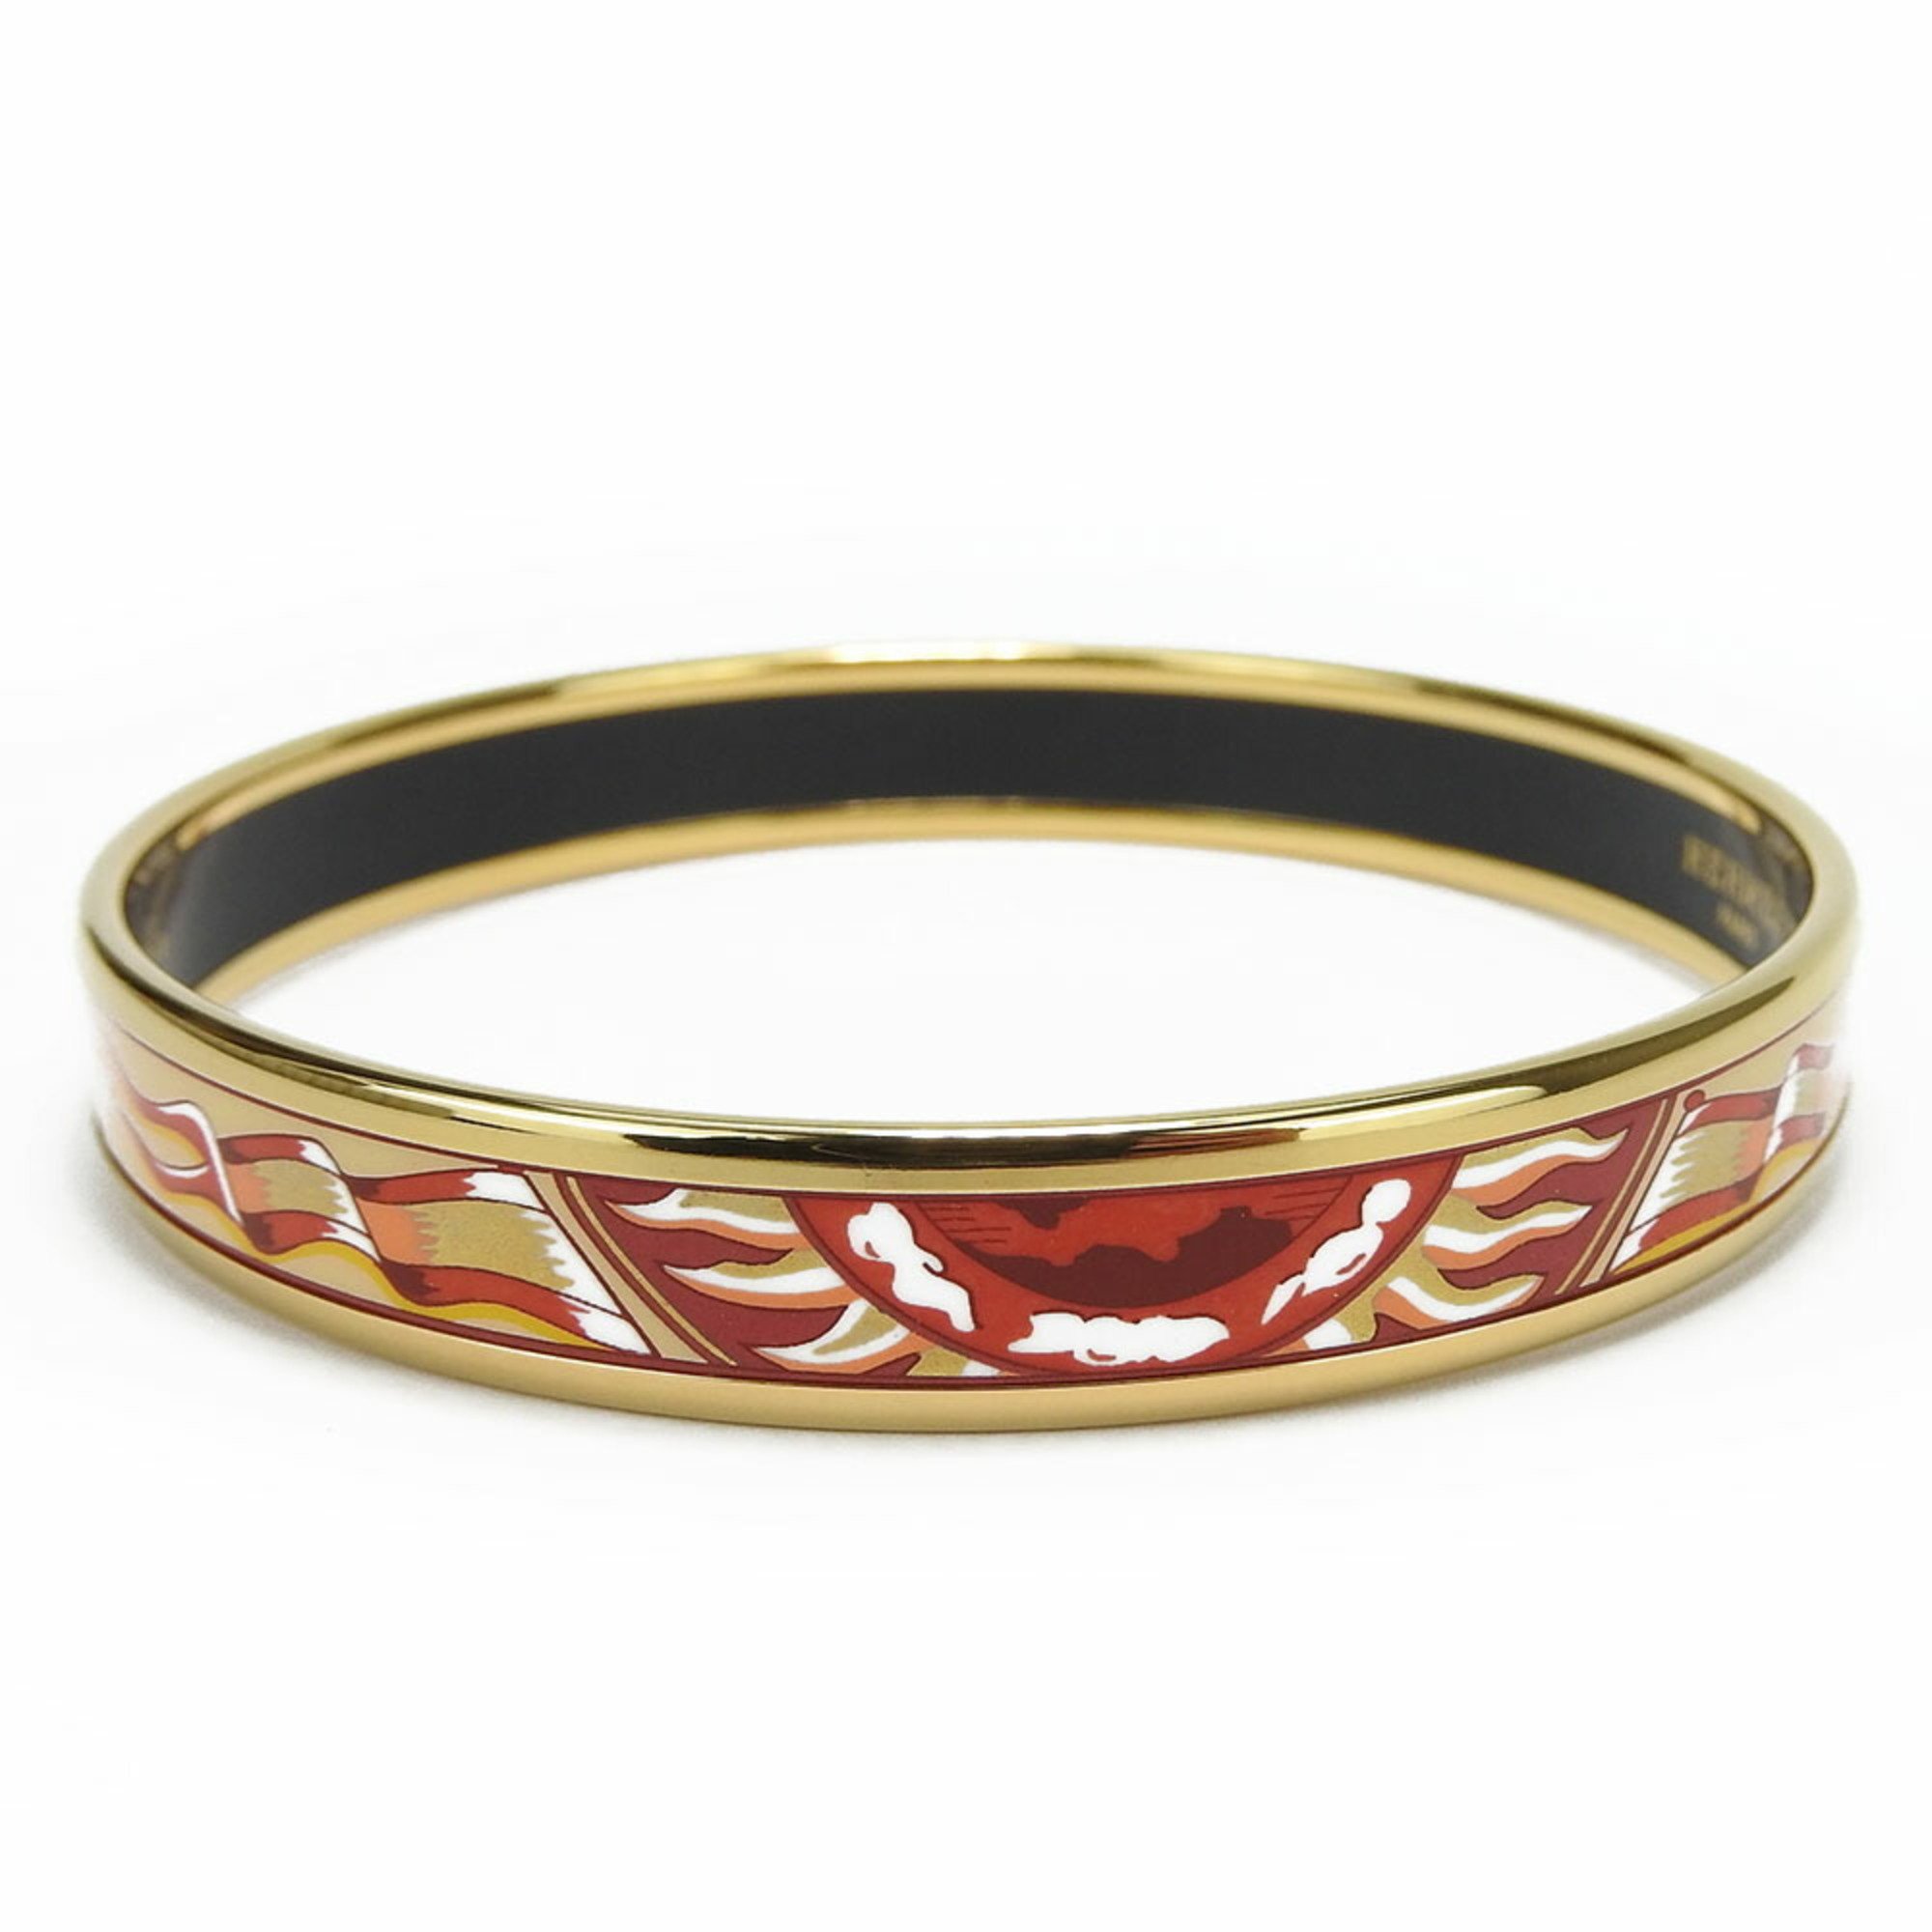 Hermes bracelet, enamel PM, metal, cloisonné, multi-color, gold, red, sailing ship, B stamp, women's, HERMES